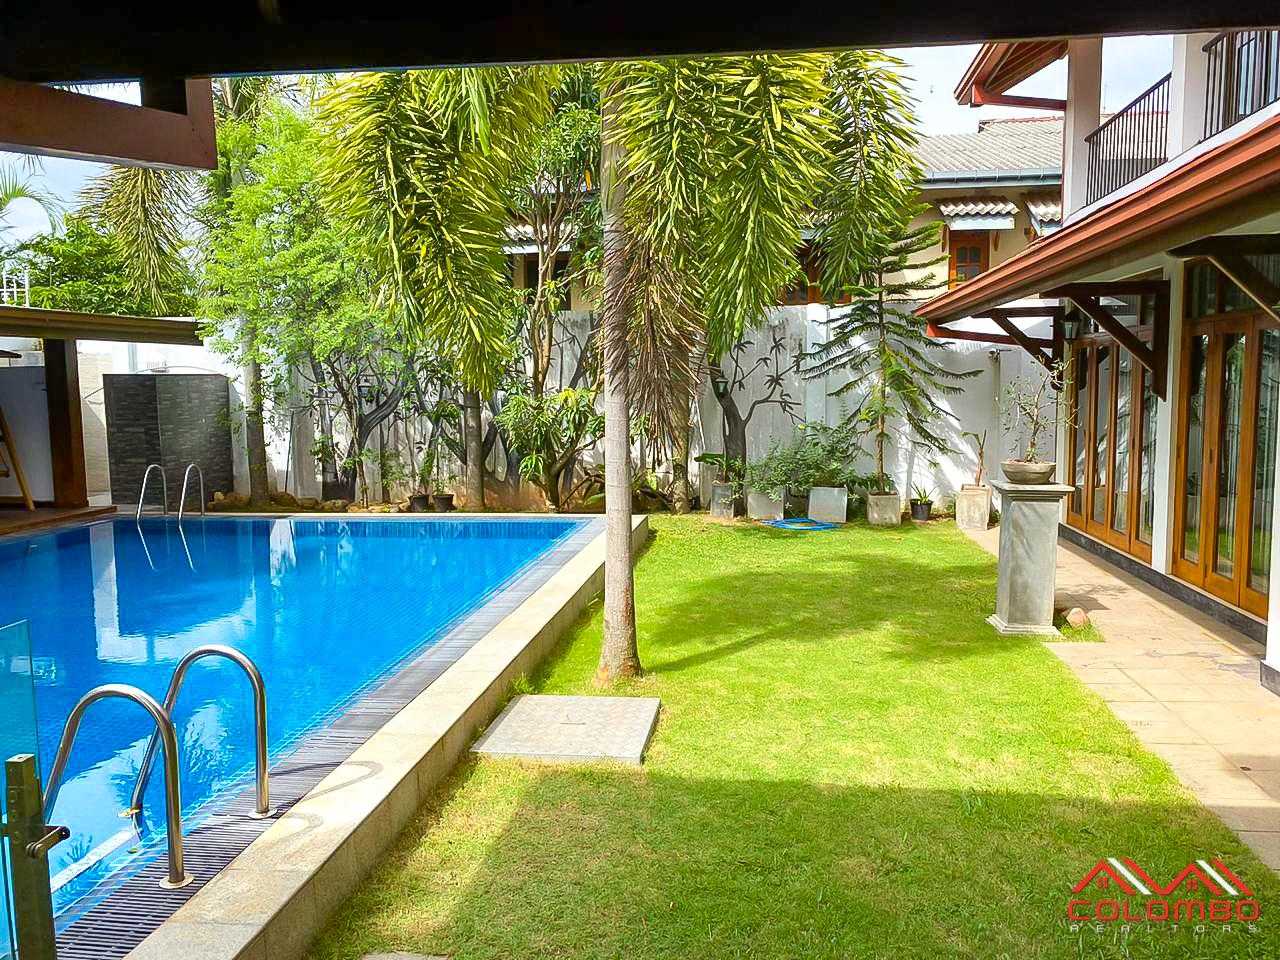 pelawatte battaramulla luxury house swimming pool  perch land sale buy best sri lanka sl colombo realtors lk